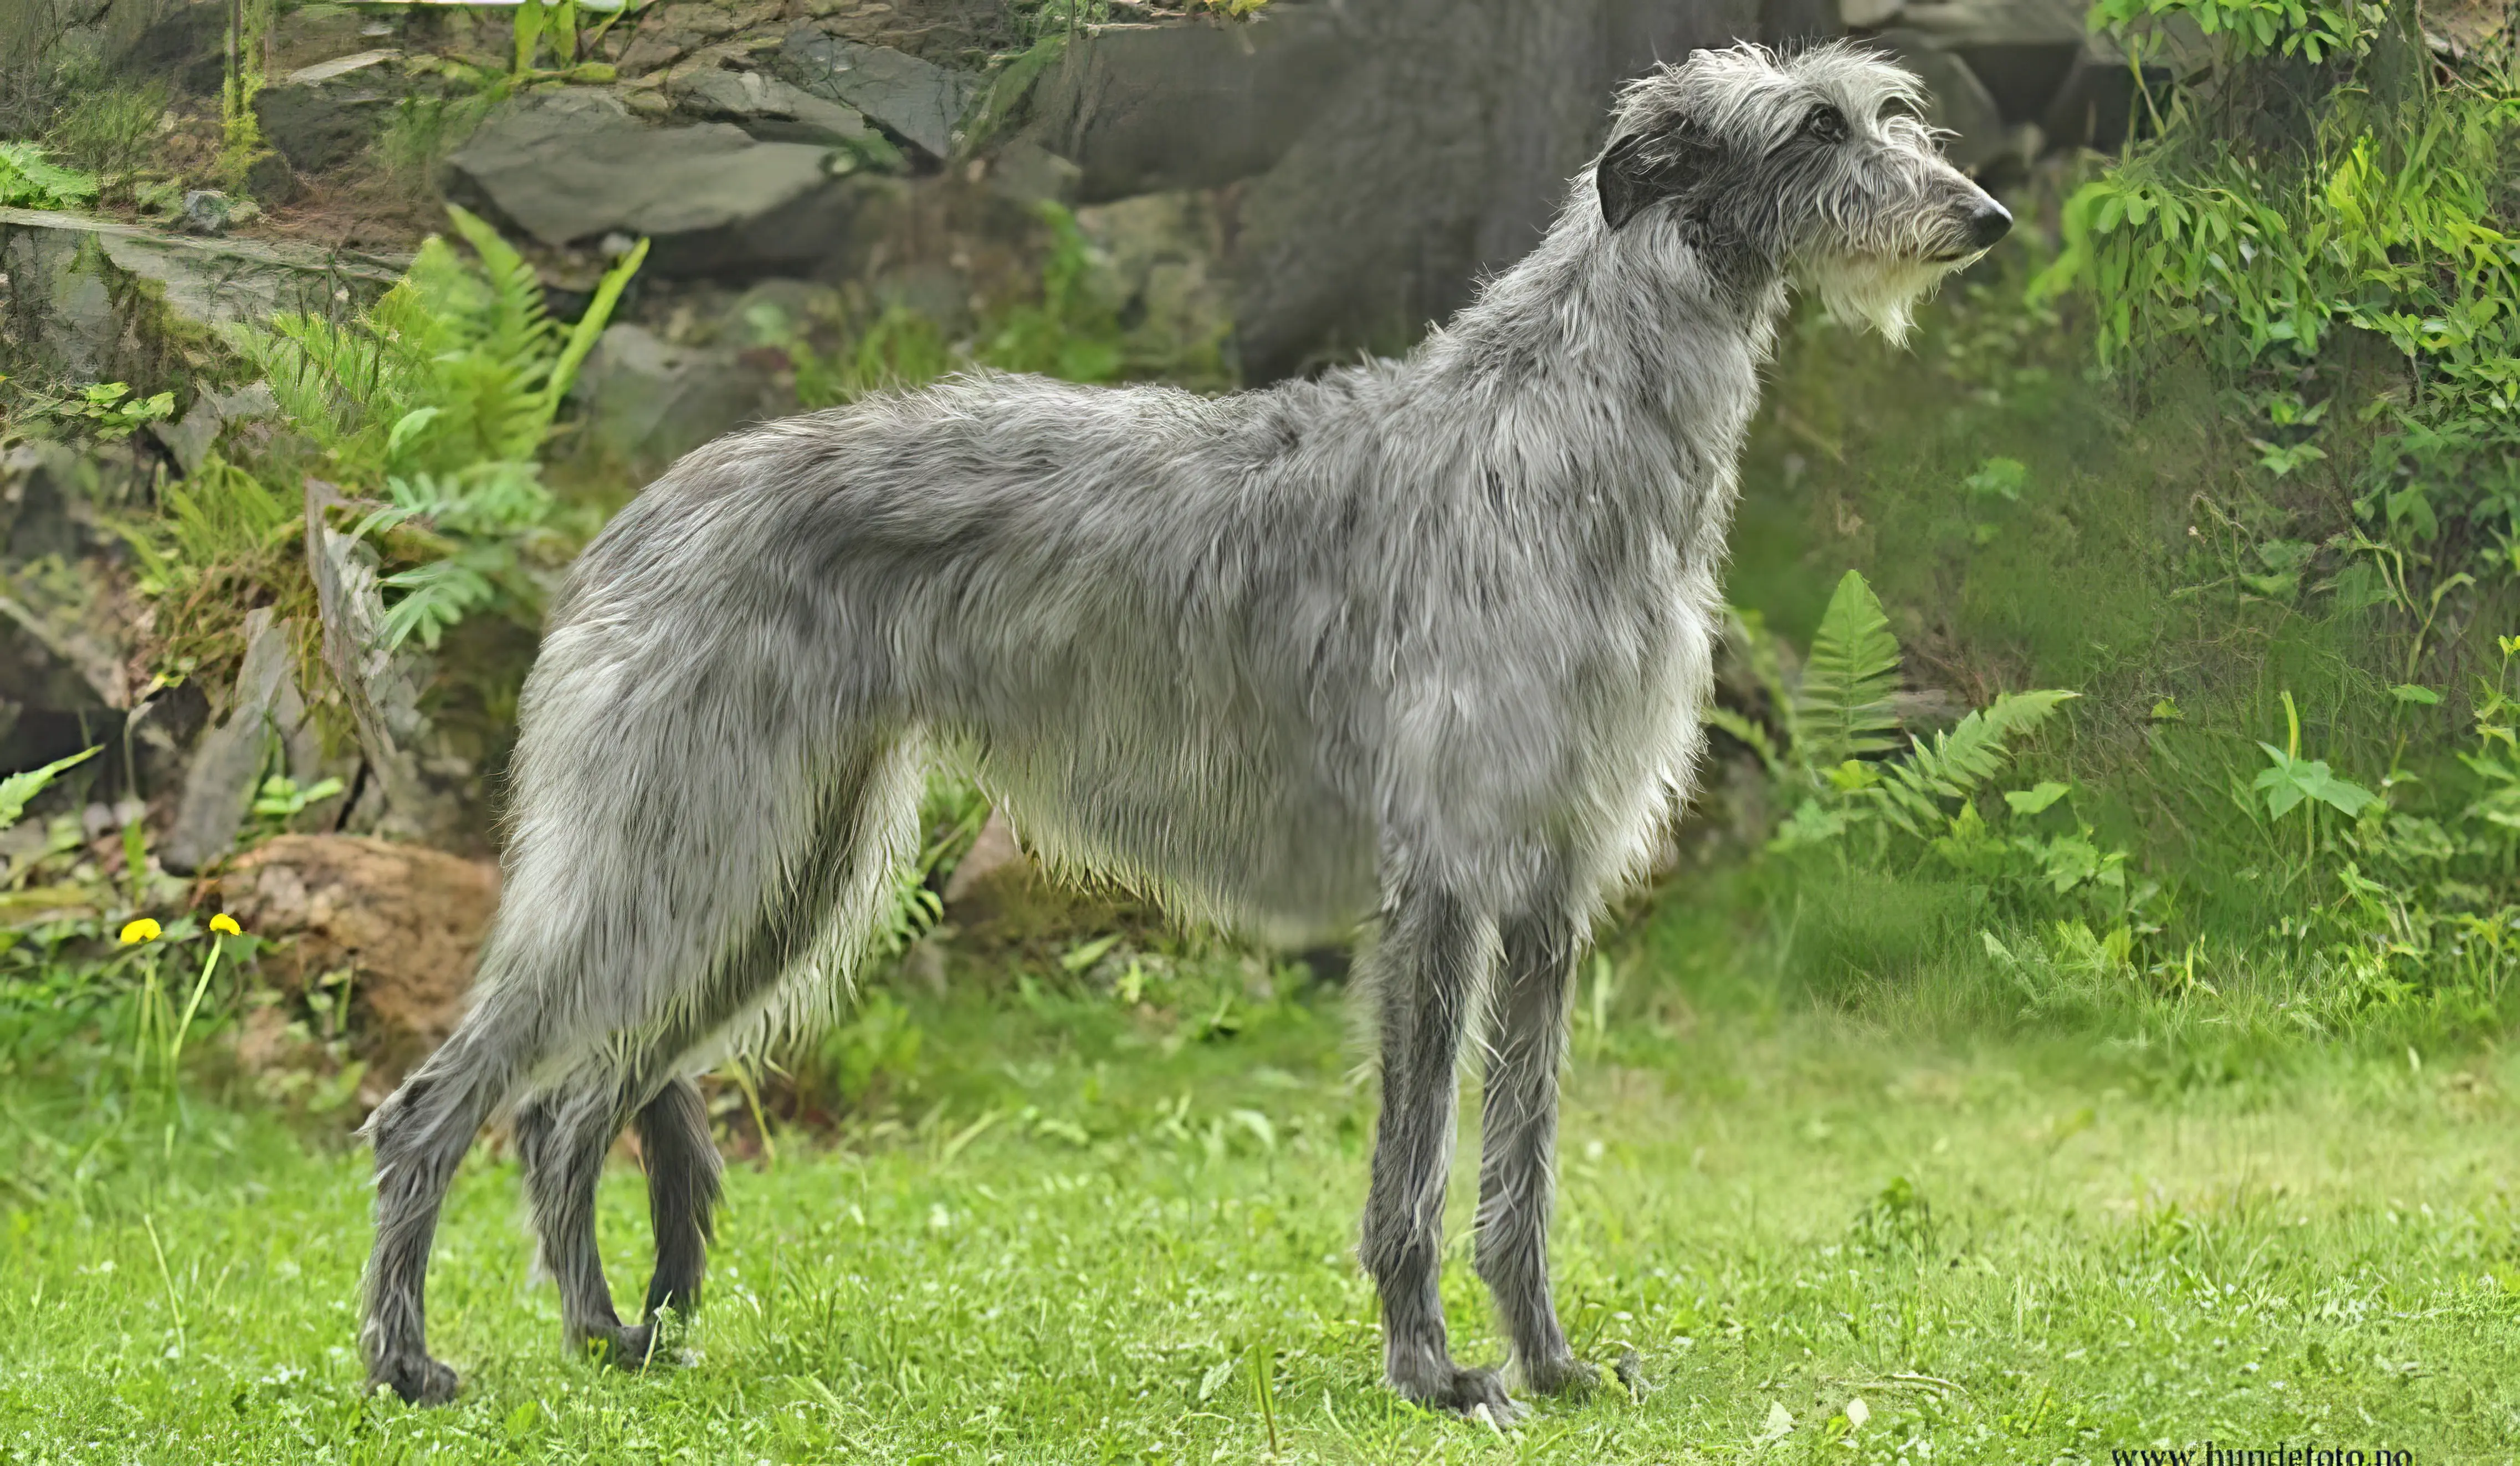 scottish deerhound profile standing green grass topaz enhance 3.8x